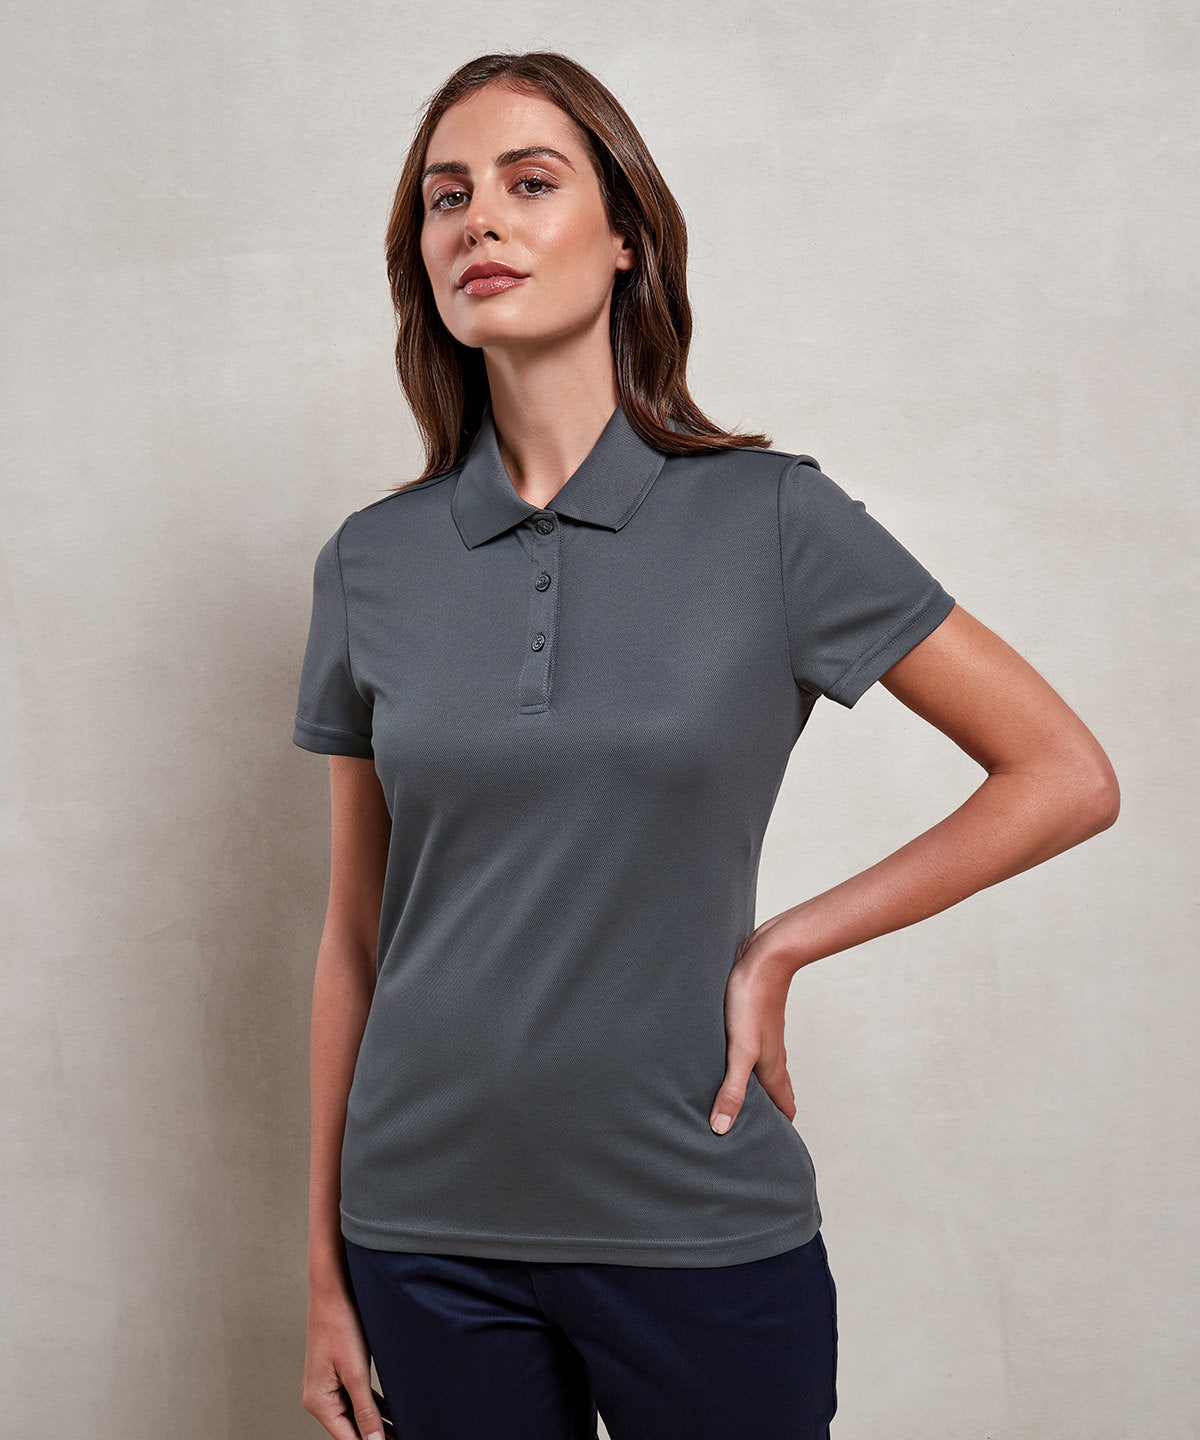 Women's spun dyed sustainable polo shirt